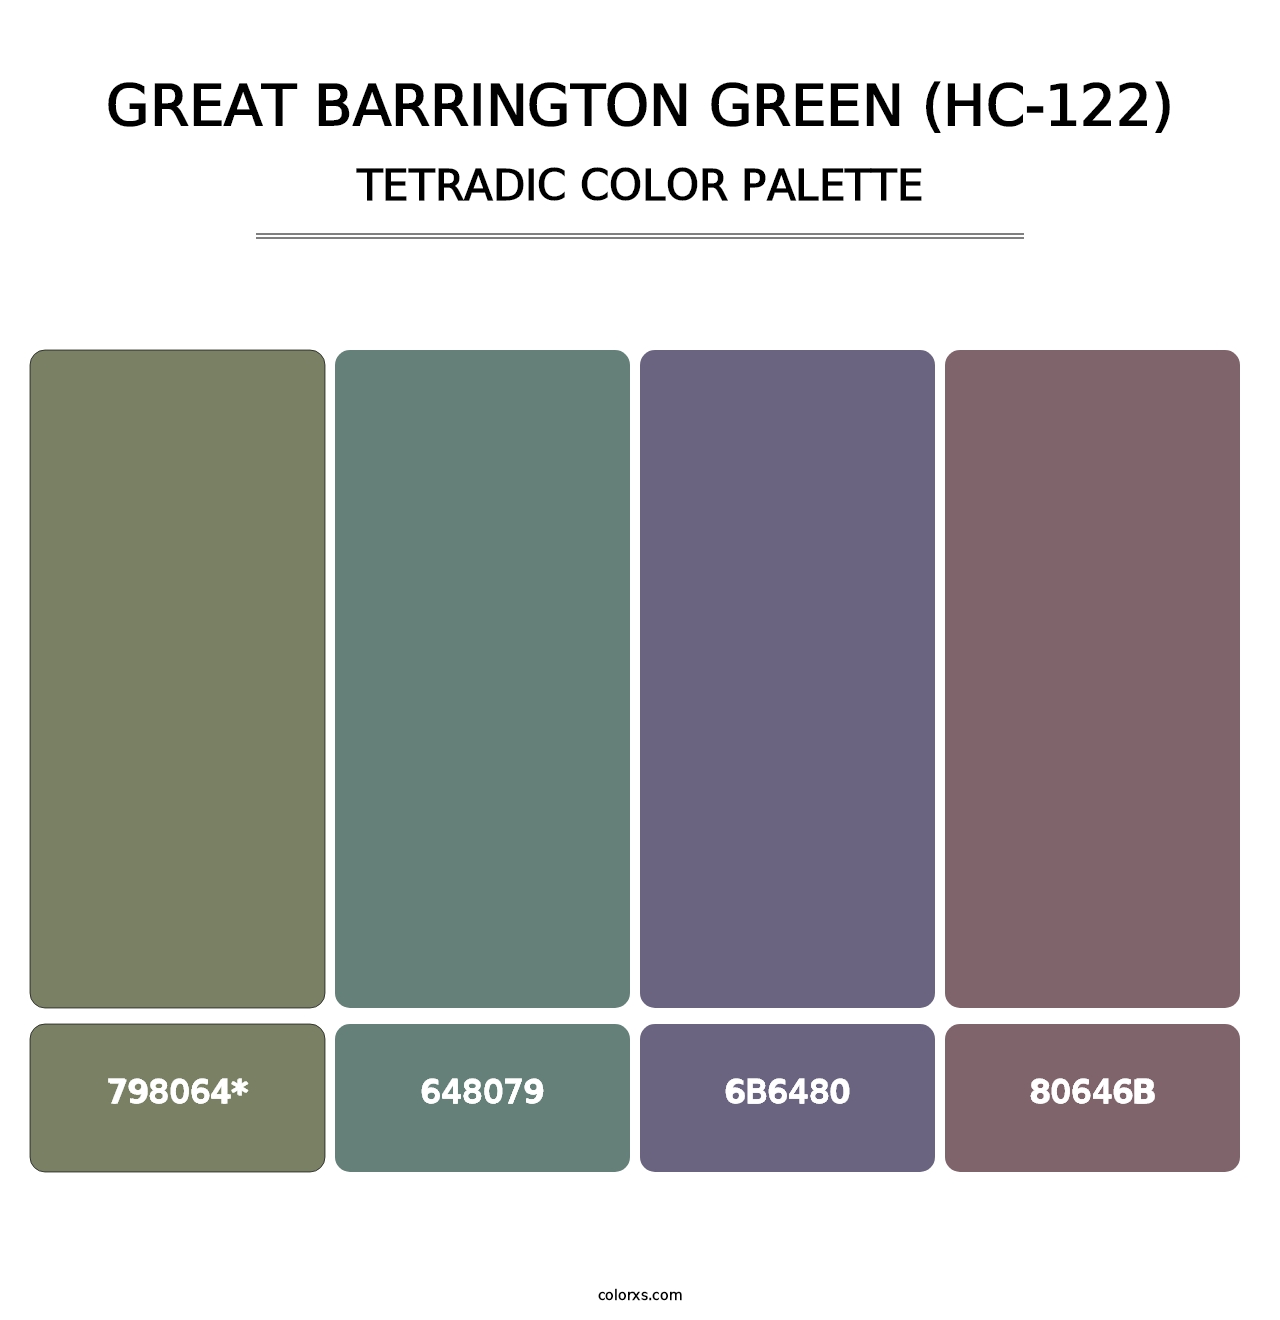 Great Barrington Green (HC-122) - Tetradic Color Palette